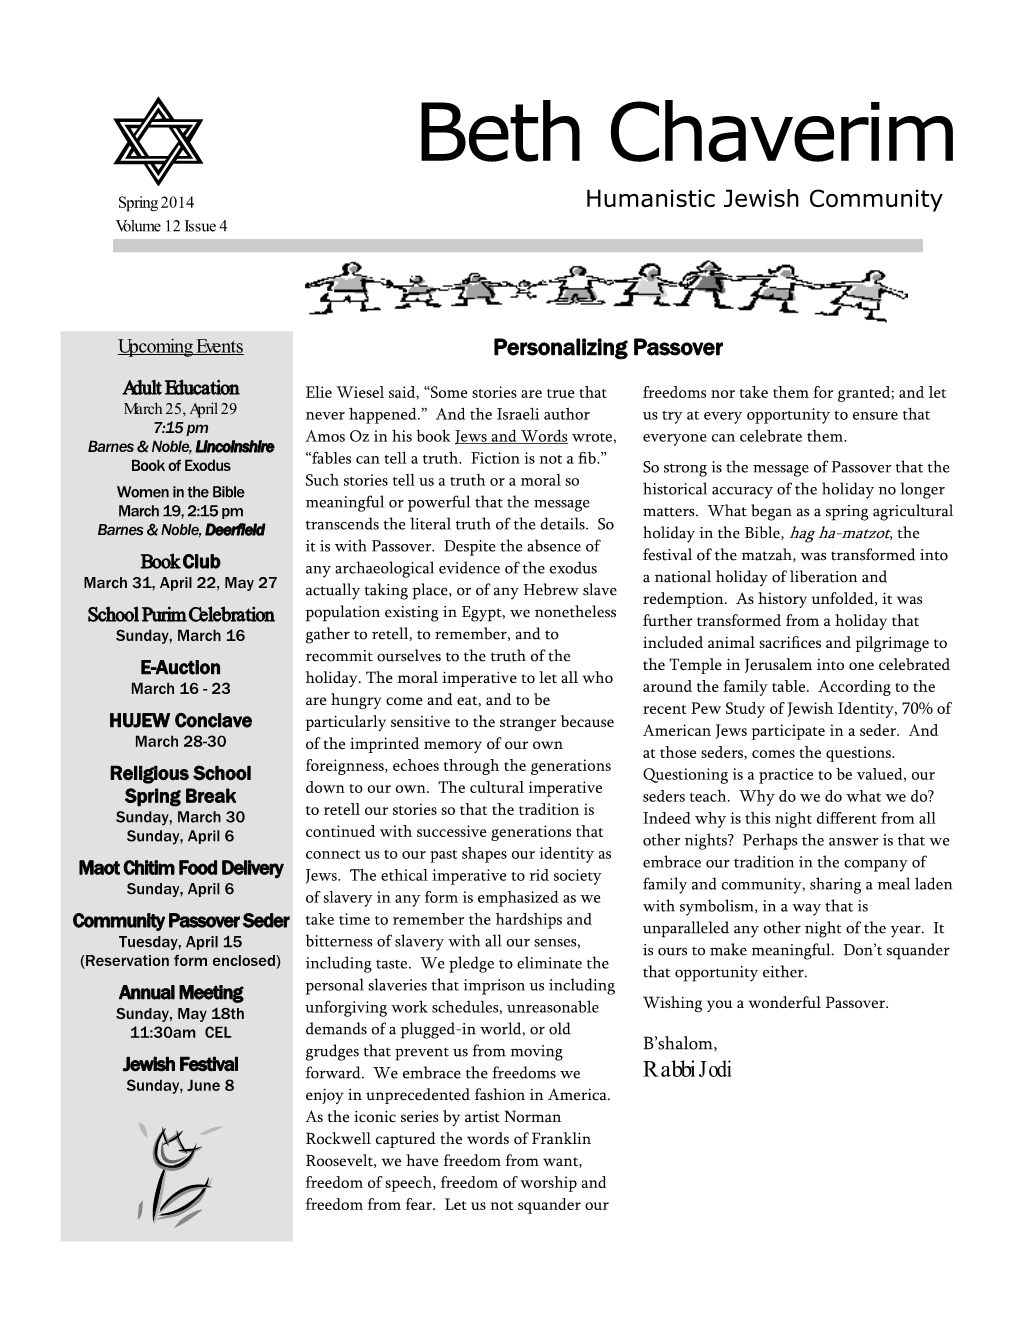 Beth Chaverim Spring 2014 Humanistic Jewish Community Volume 12 Issue 4